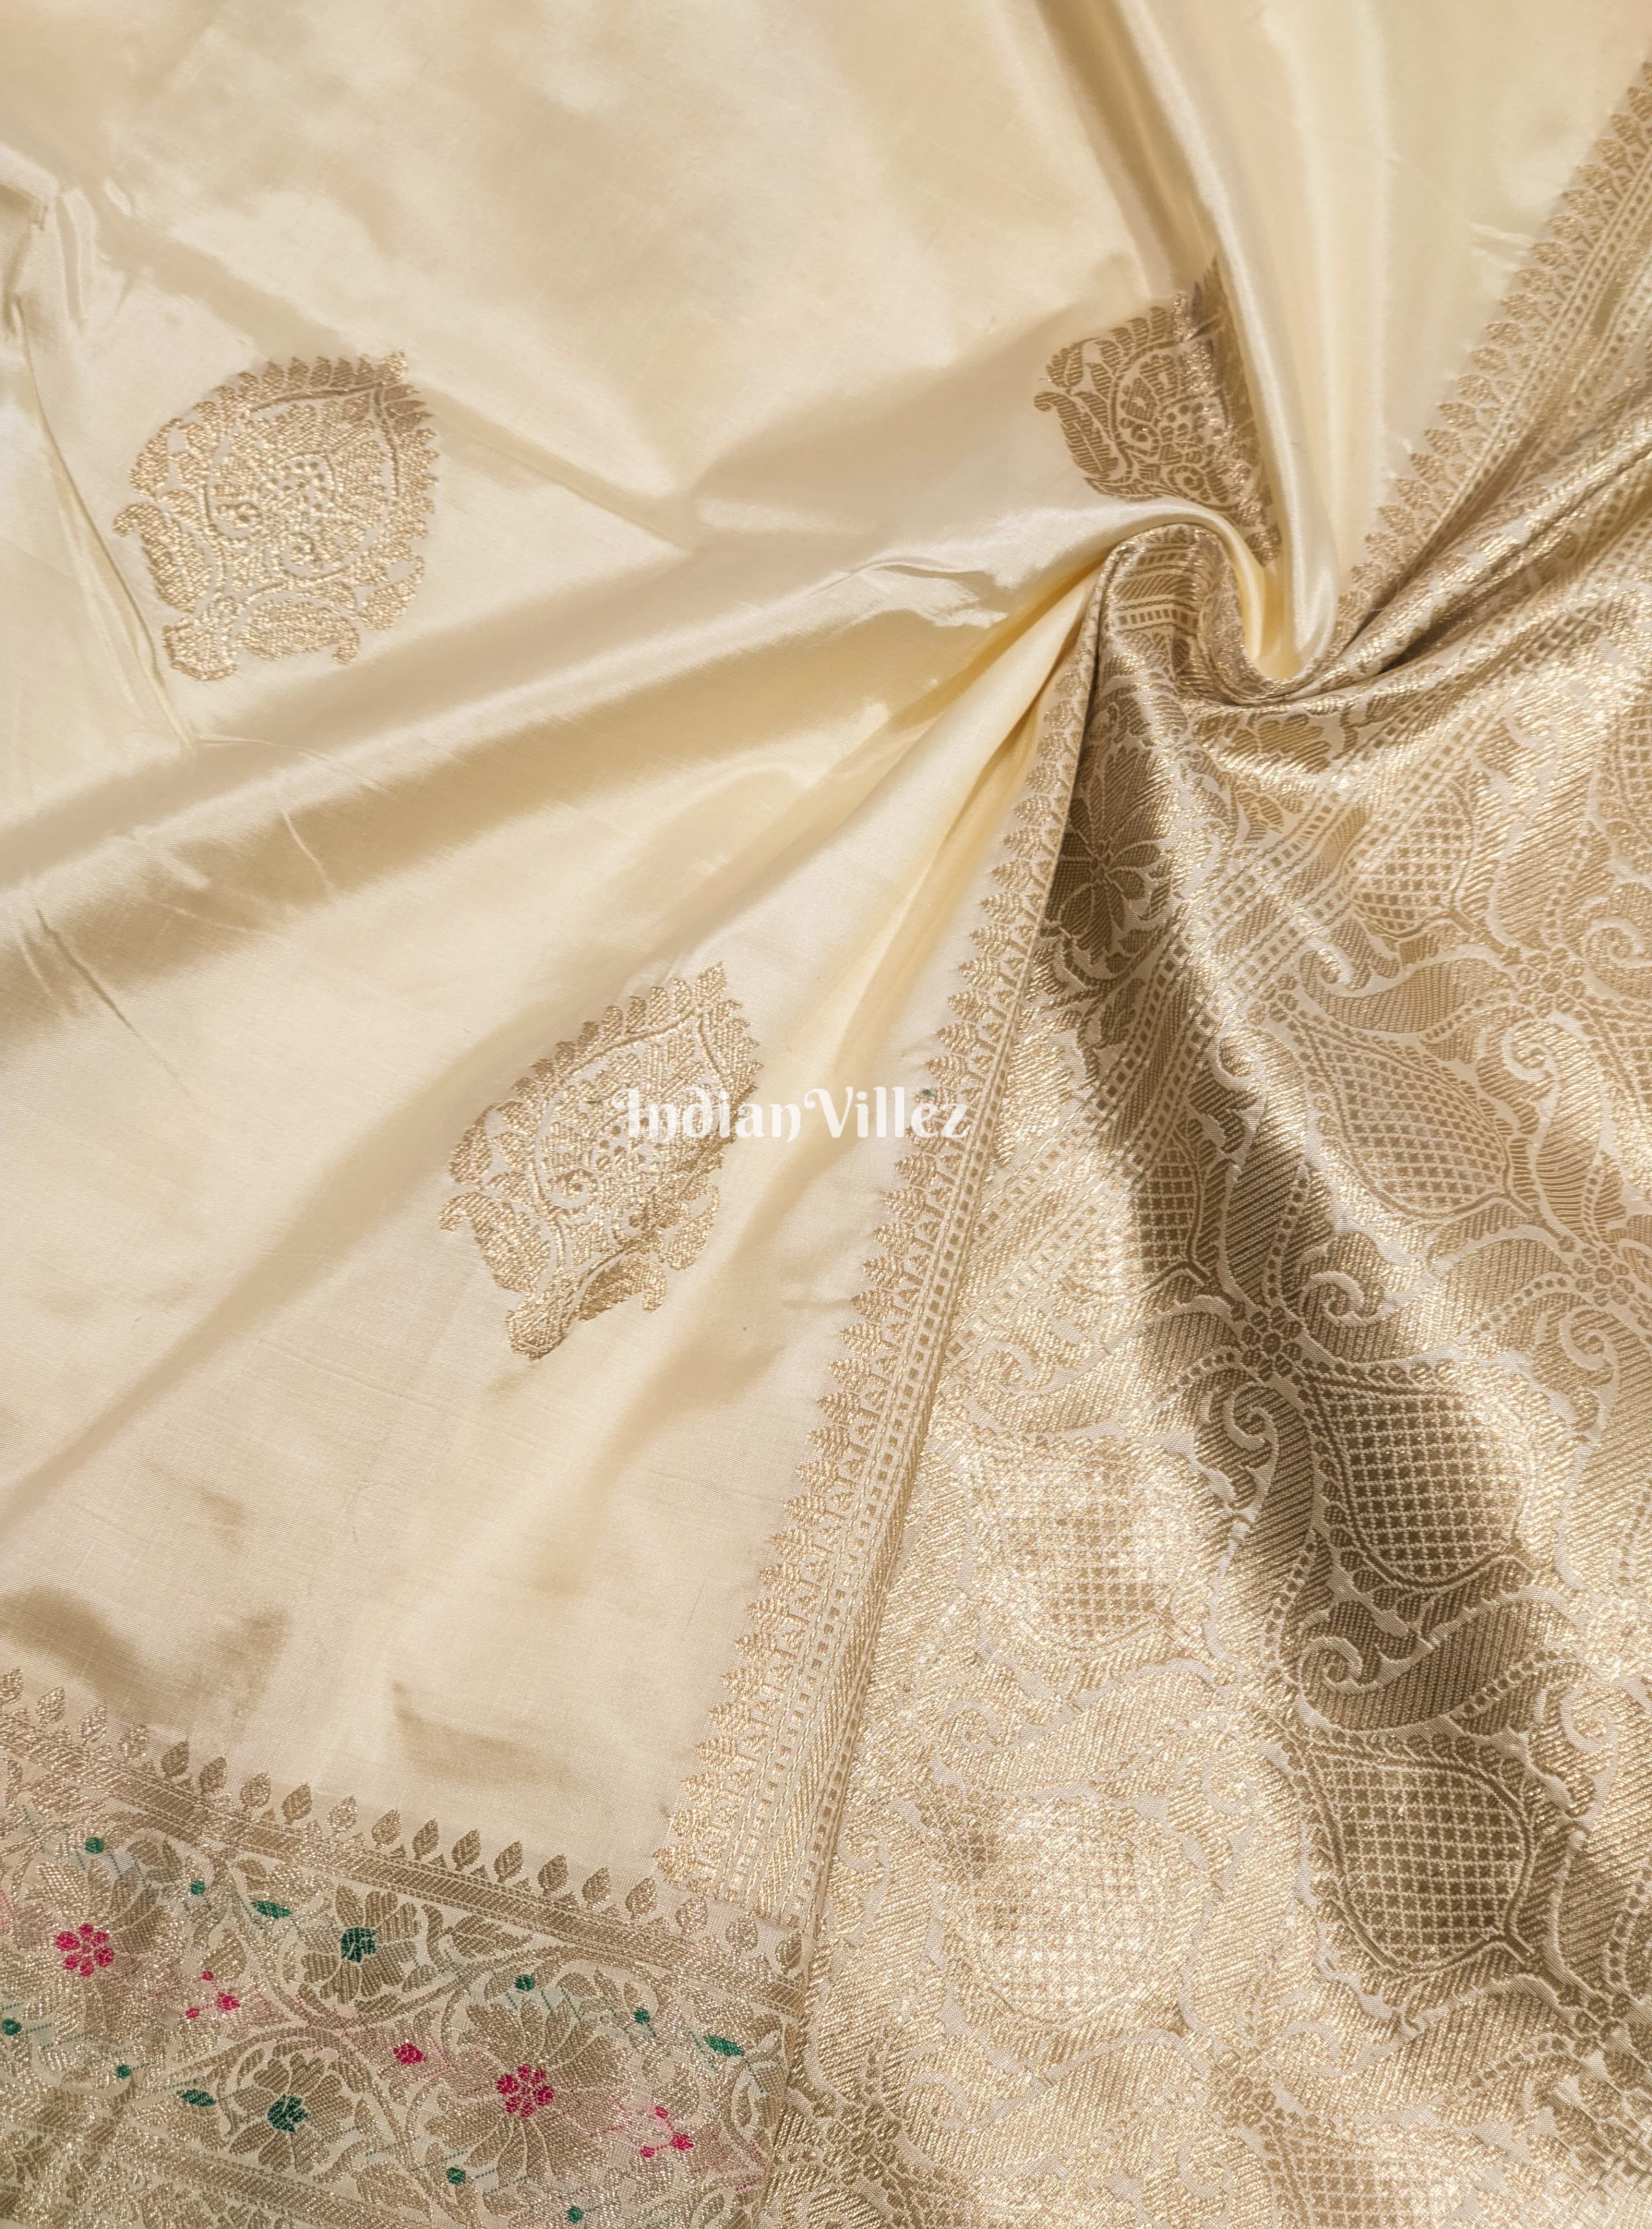  Off-White Handwoven Banarasi Katan Silk Saree